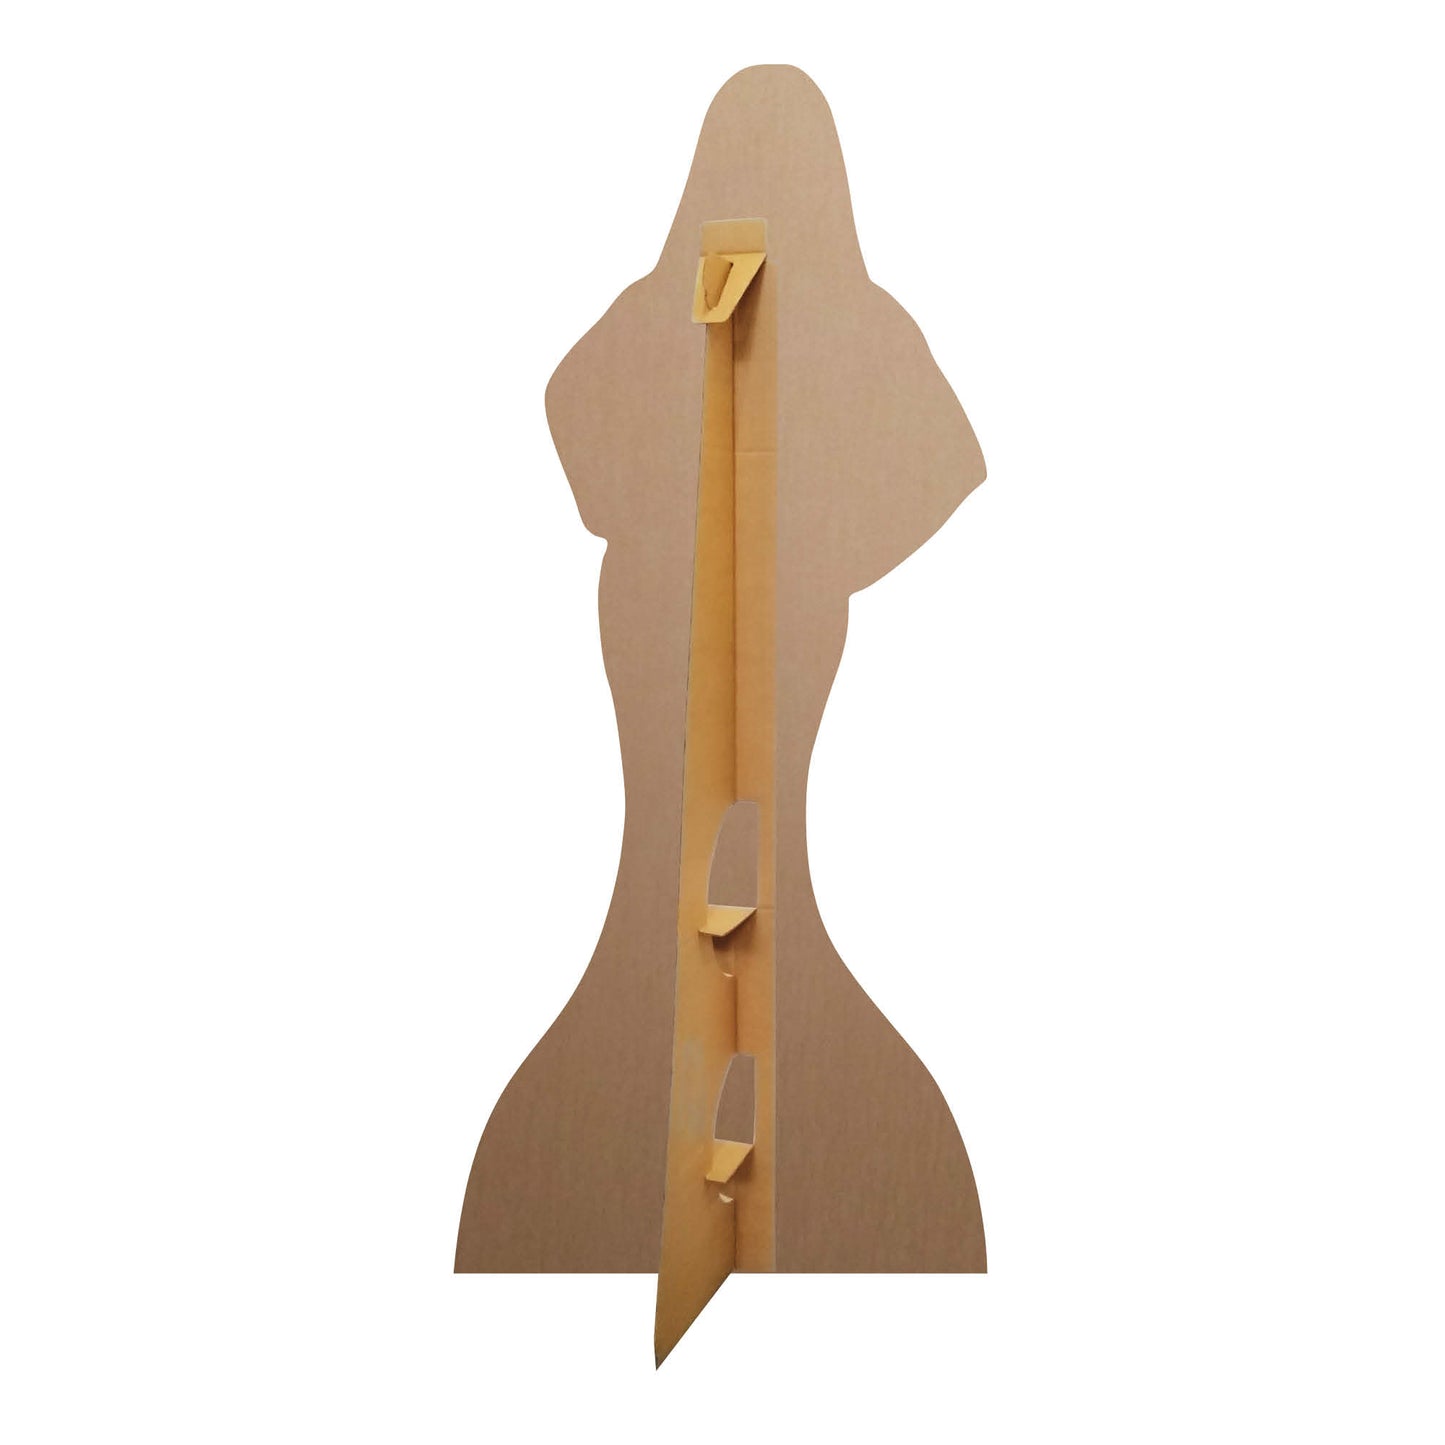 CS679 Nicki Minaj (Gold Dress) Height 163cm Lifesize Cardboard Cut Out With Mini